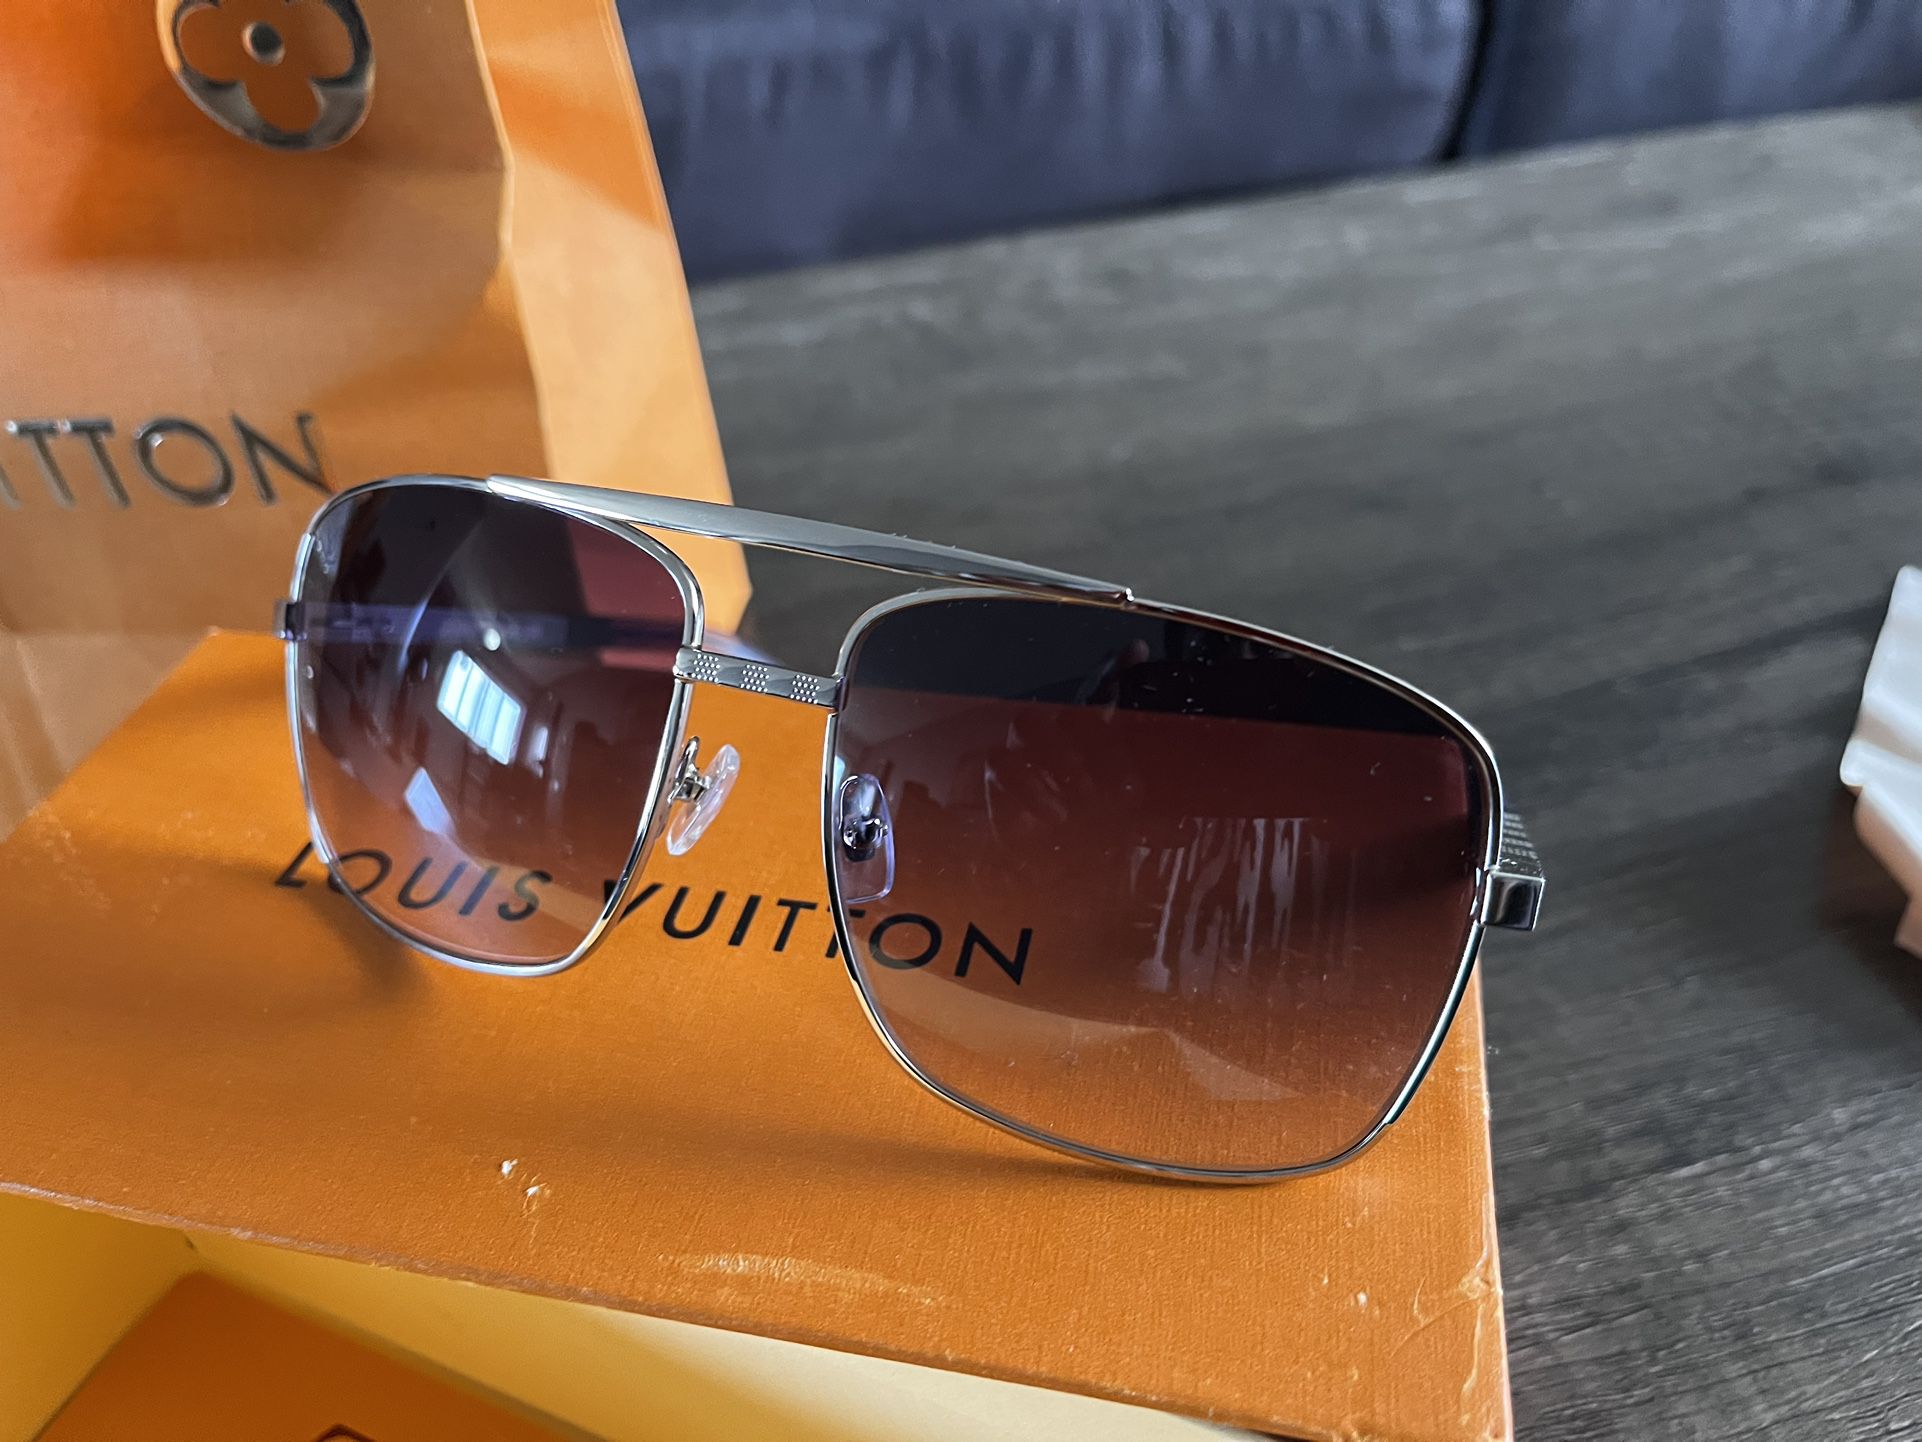 Rute grundigt Ligner Louis Vuitton Attitude Pilote Sunglasses for Sale in Inglewood, CA - OfferUp